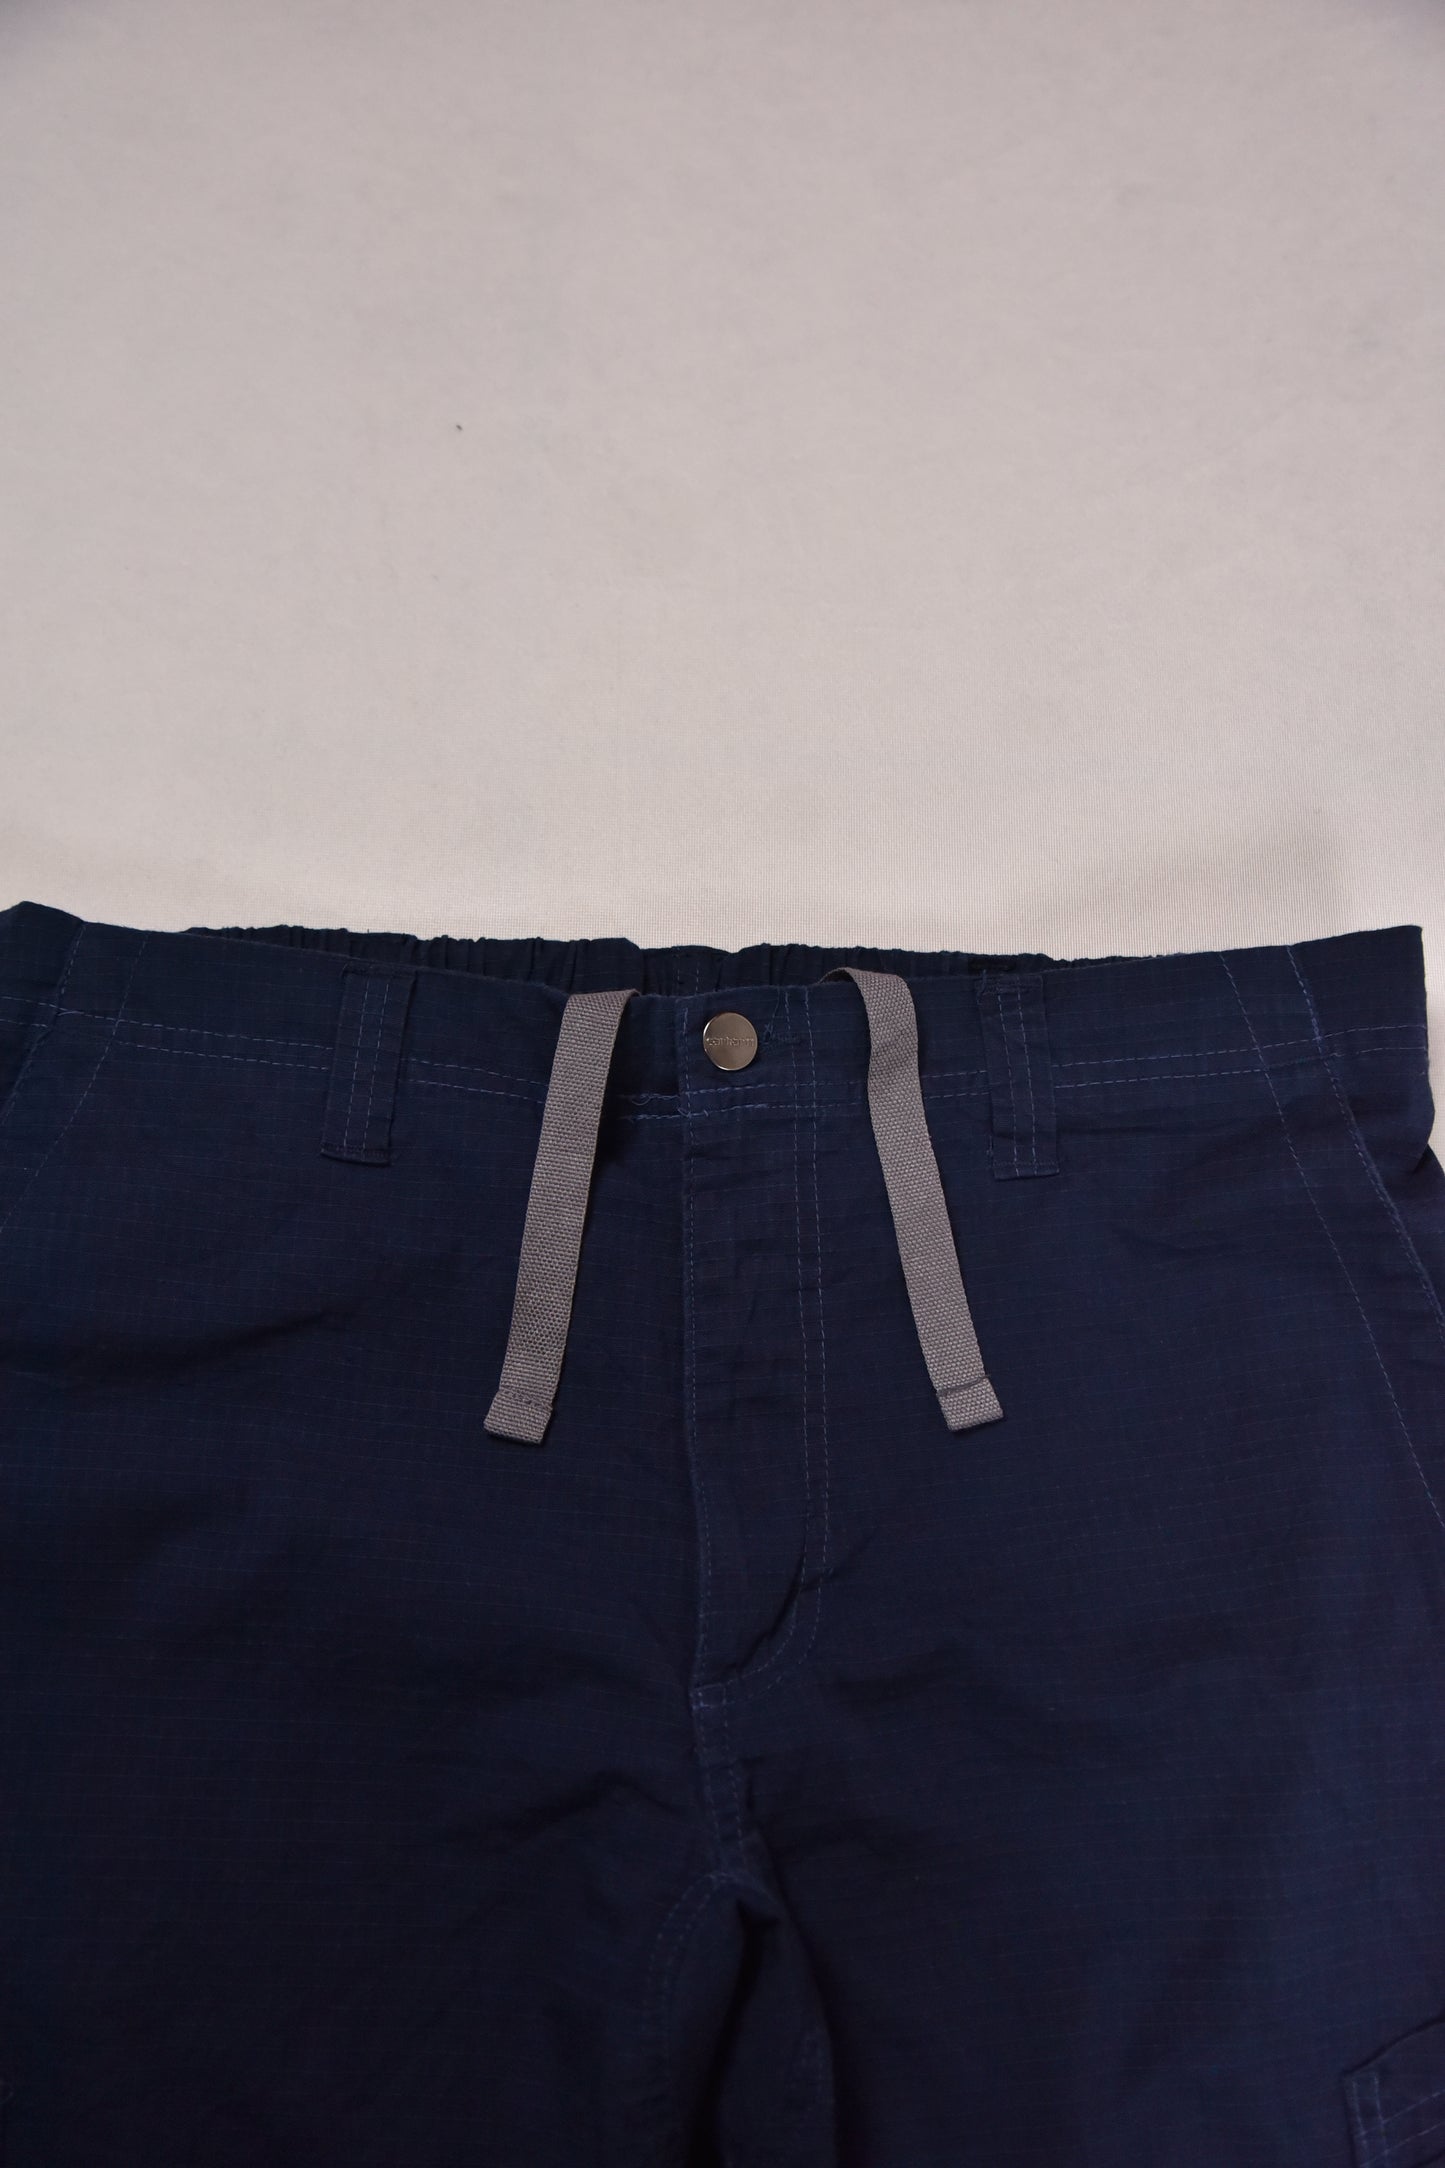 Carhartt Workwear Pants Vintage / S - L